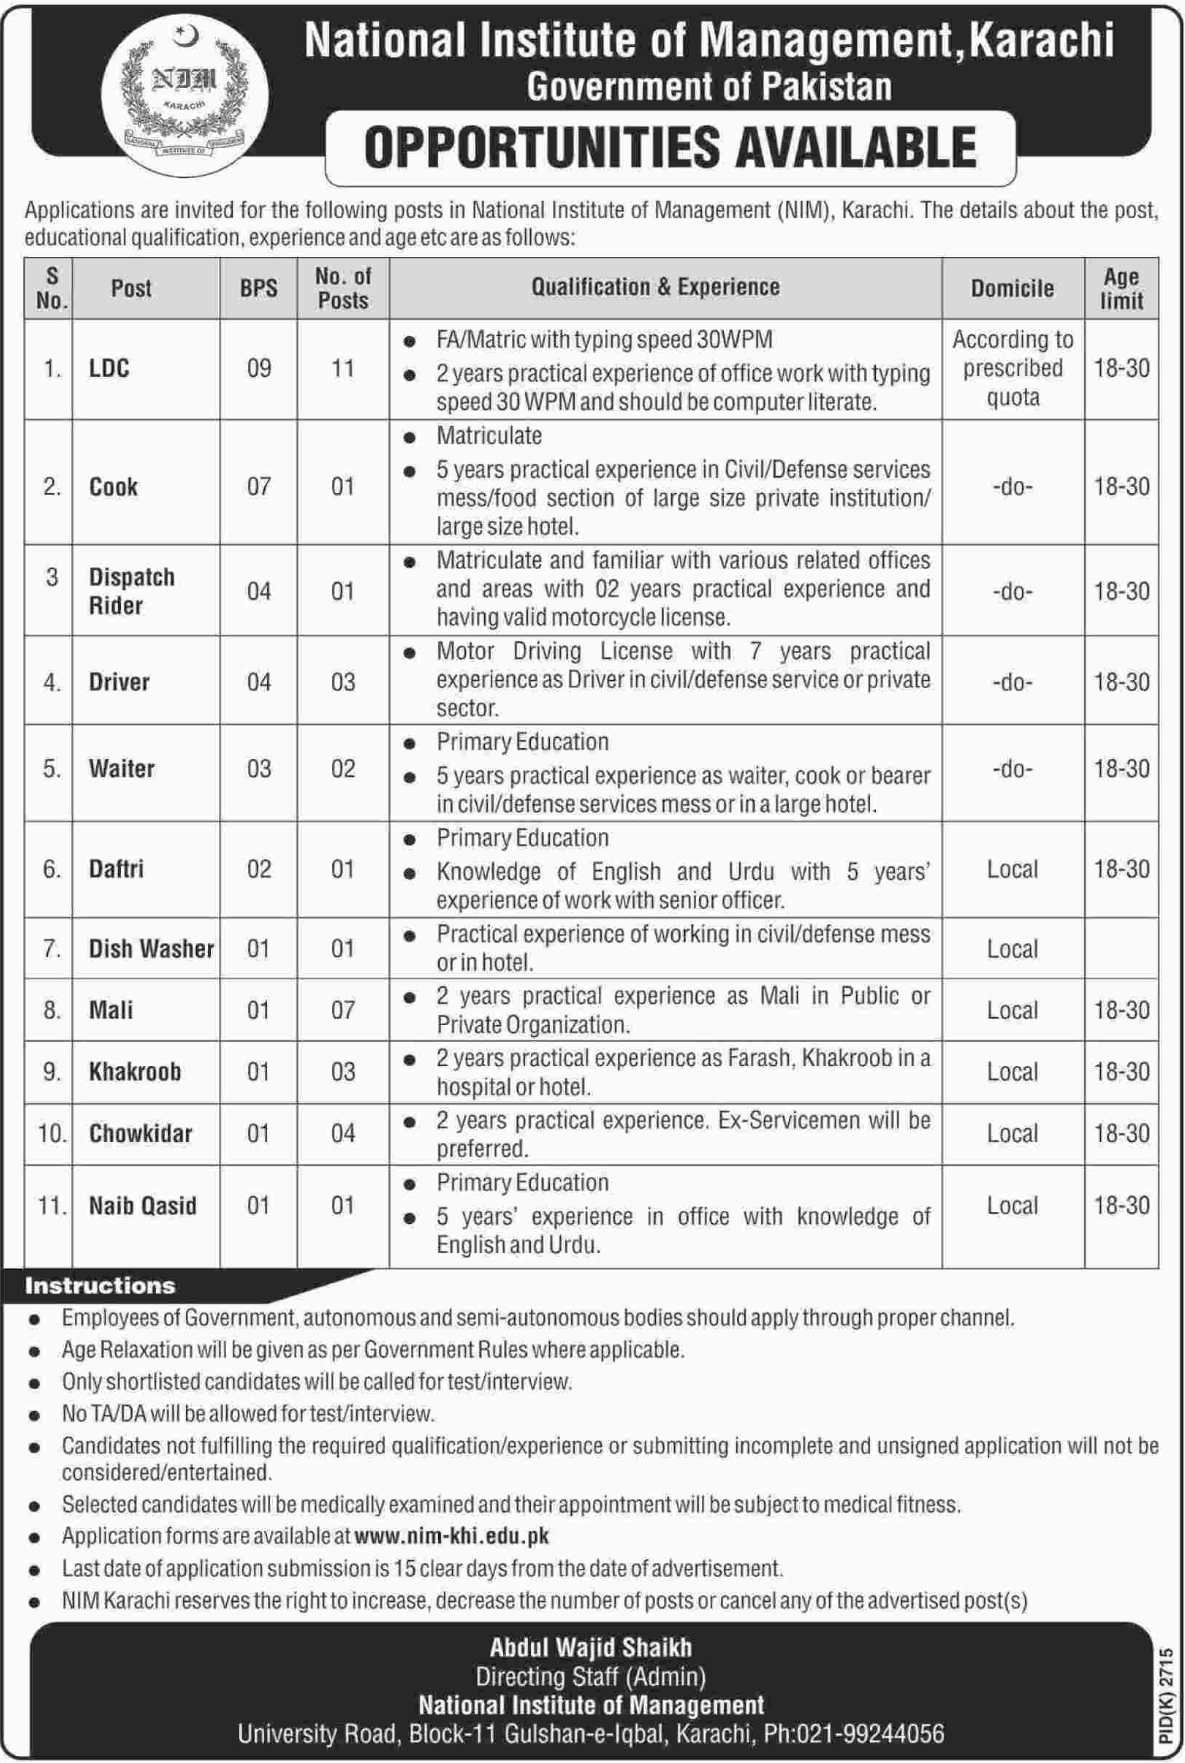 Karachi, National Institute of Management 35 Jobs, 25 January 2018, Daily Dawn Newspaper